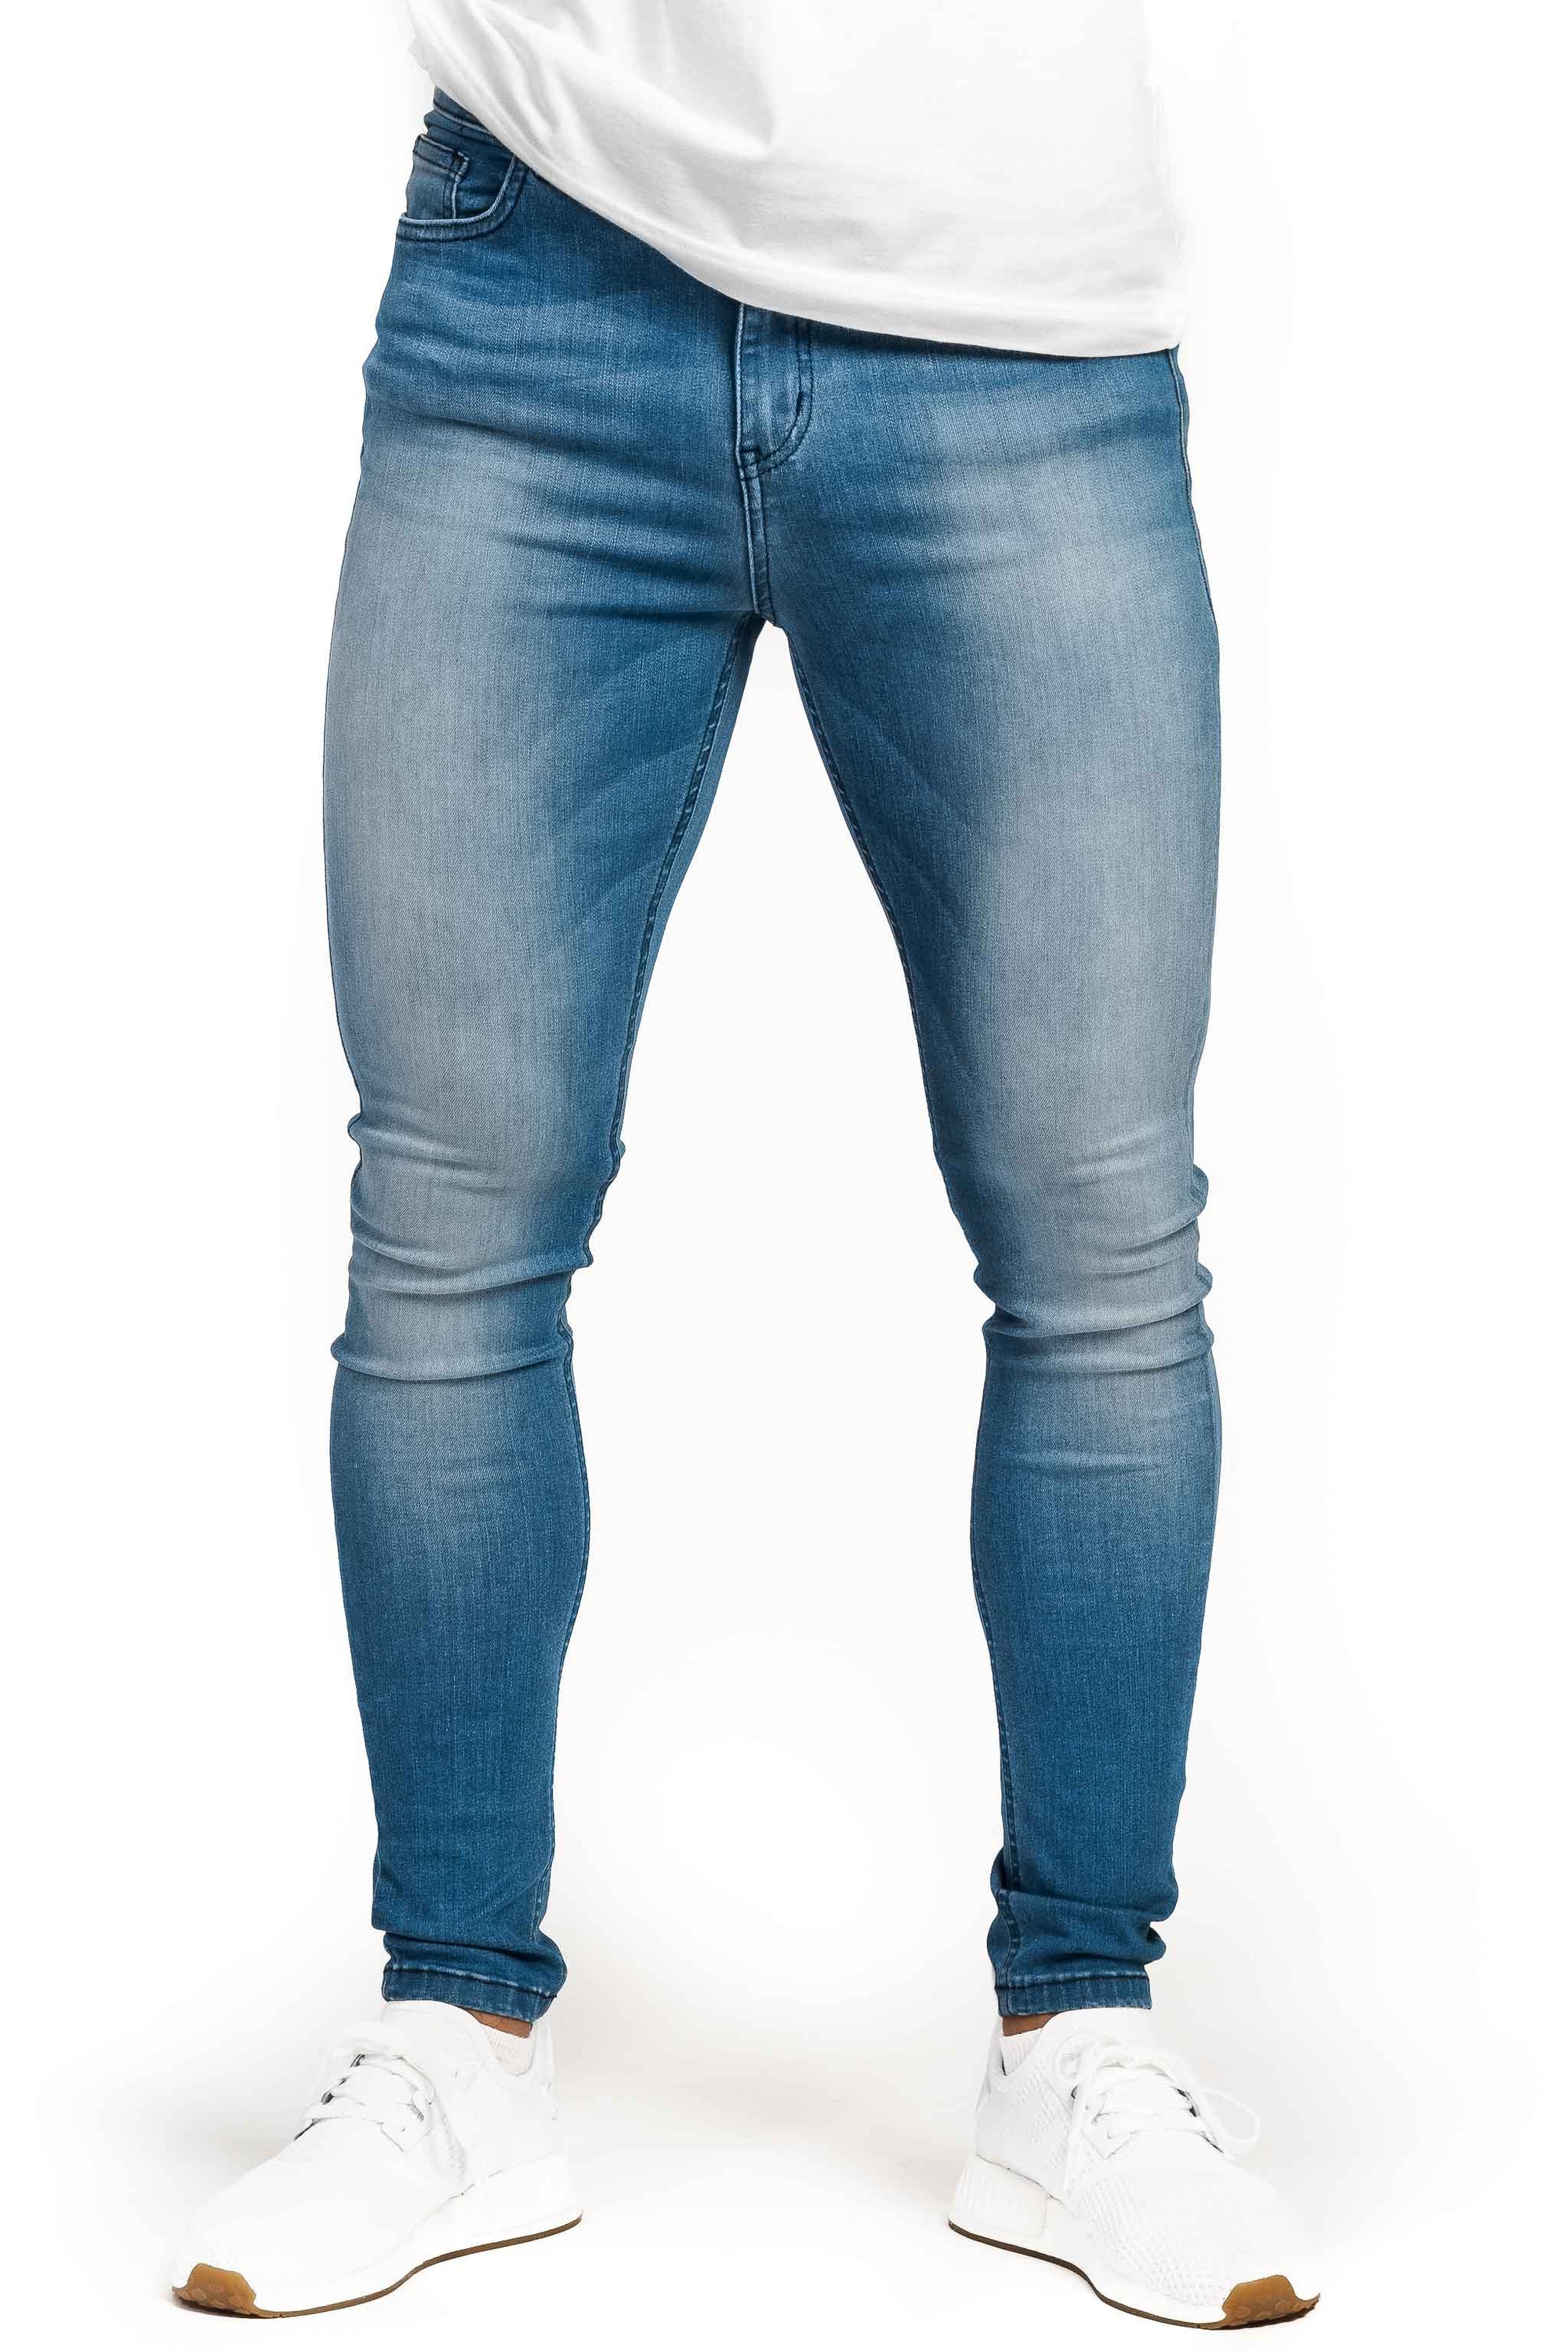 straight leg jeans body type